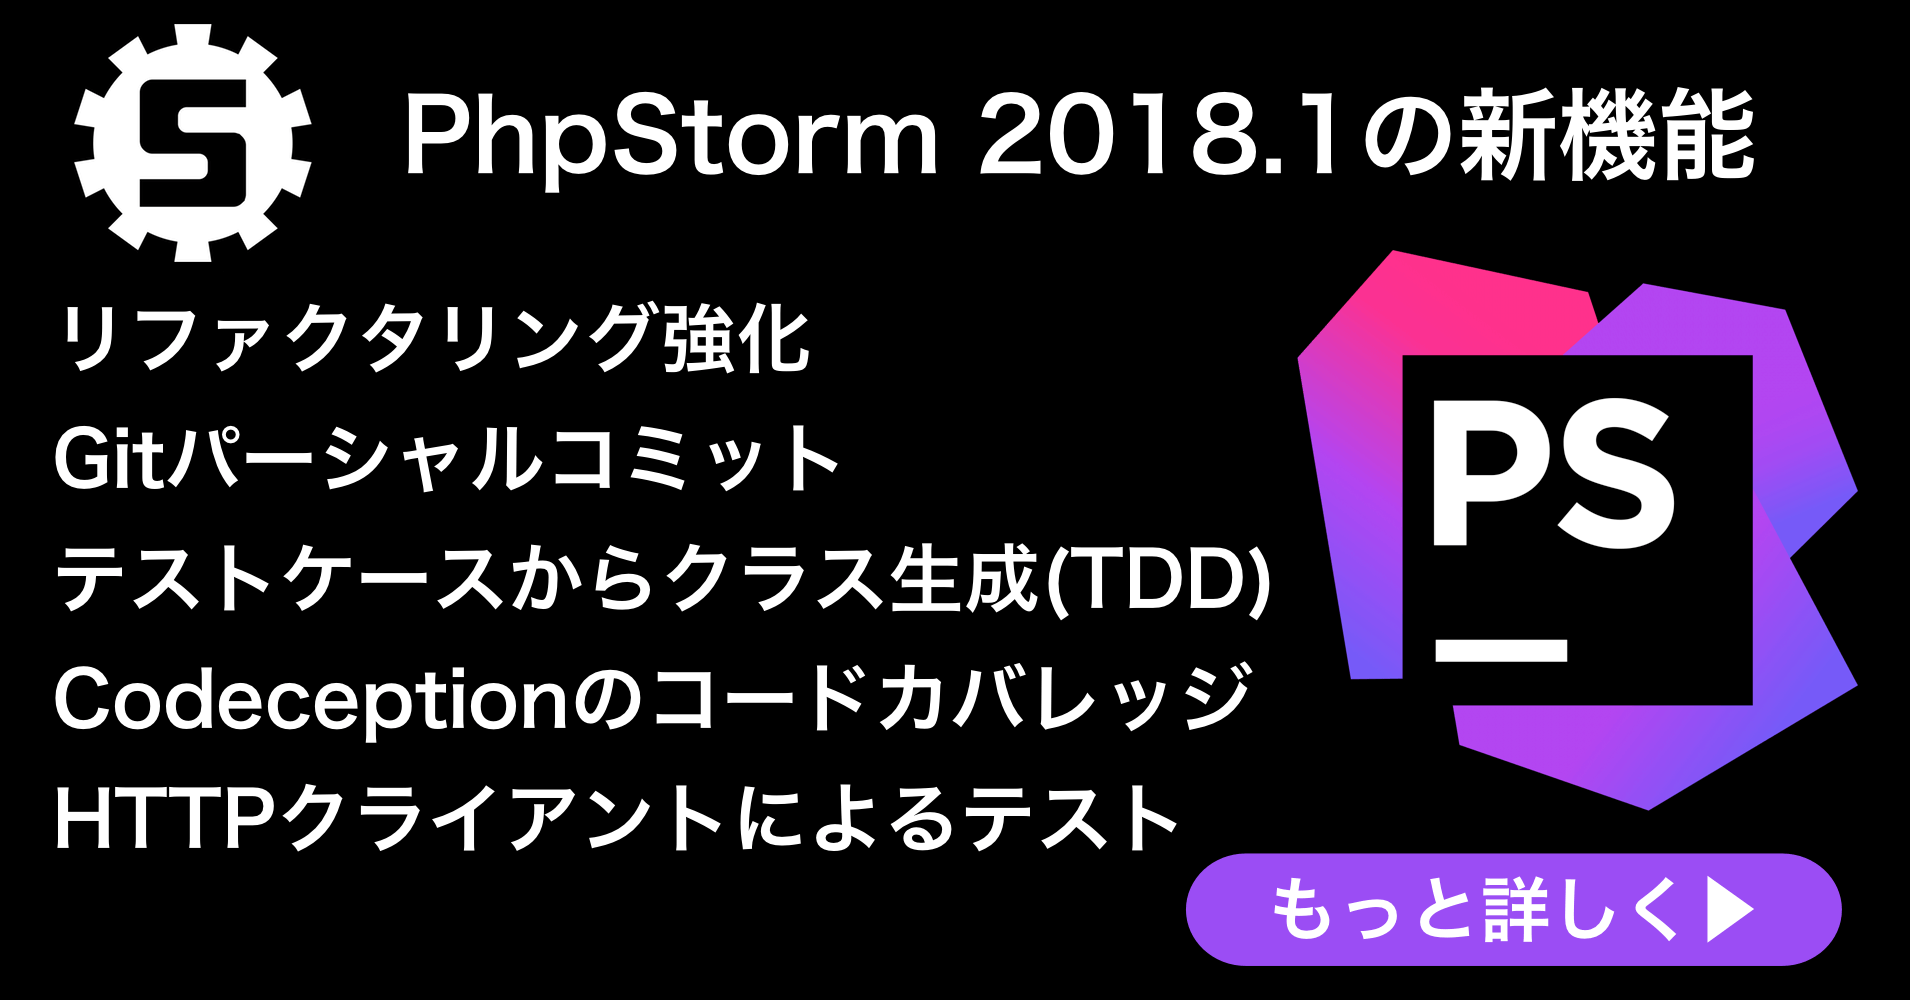 PhpStorm 2018.1リリース